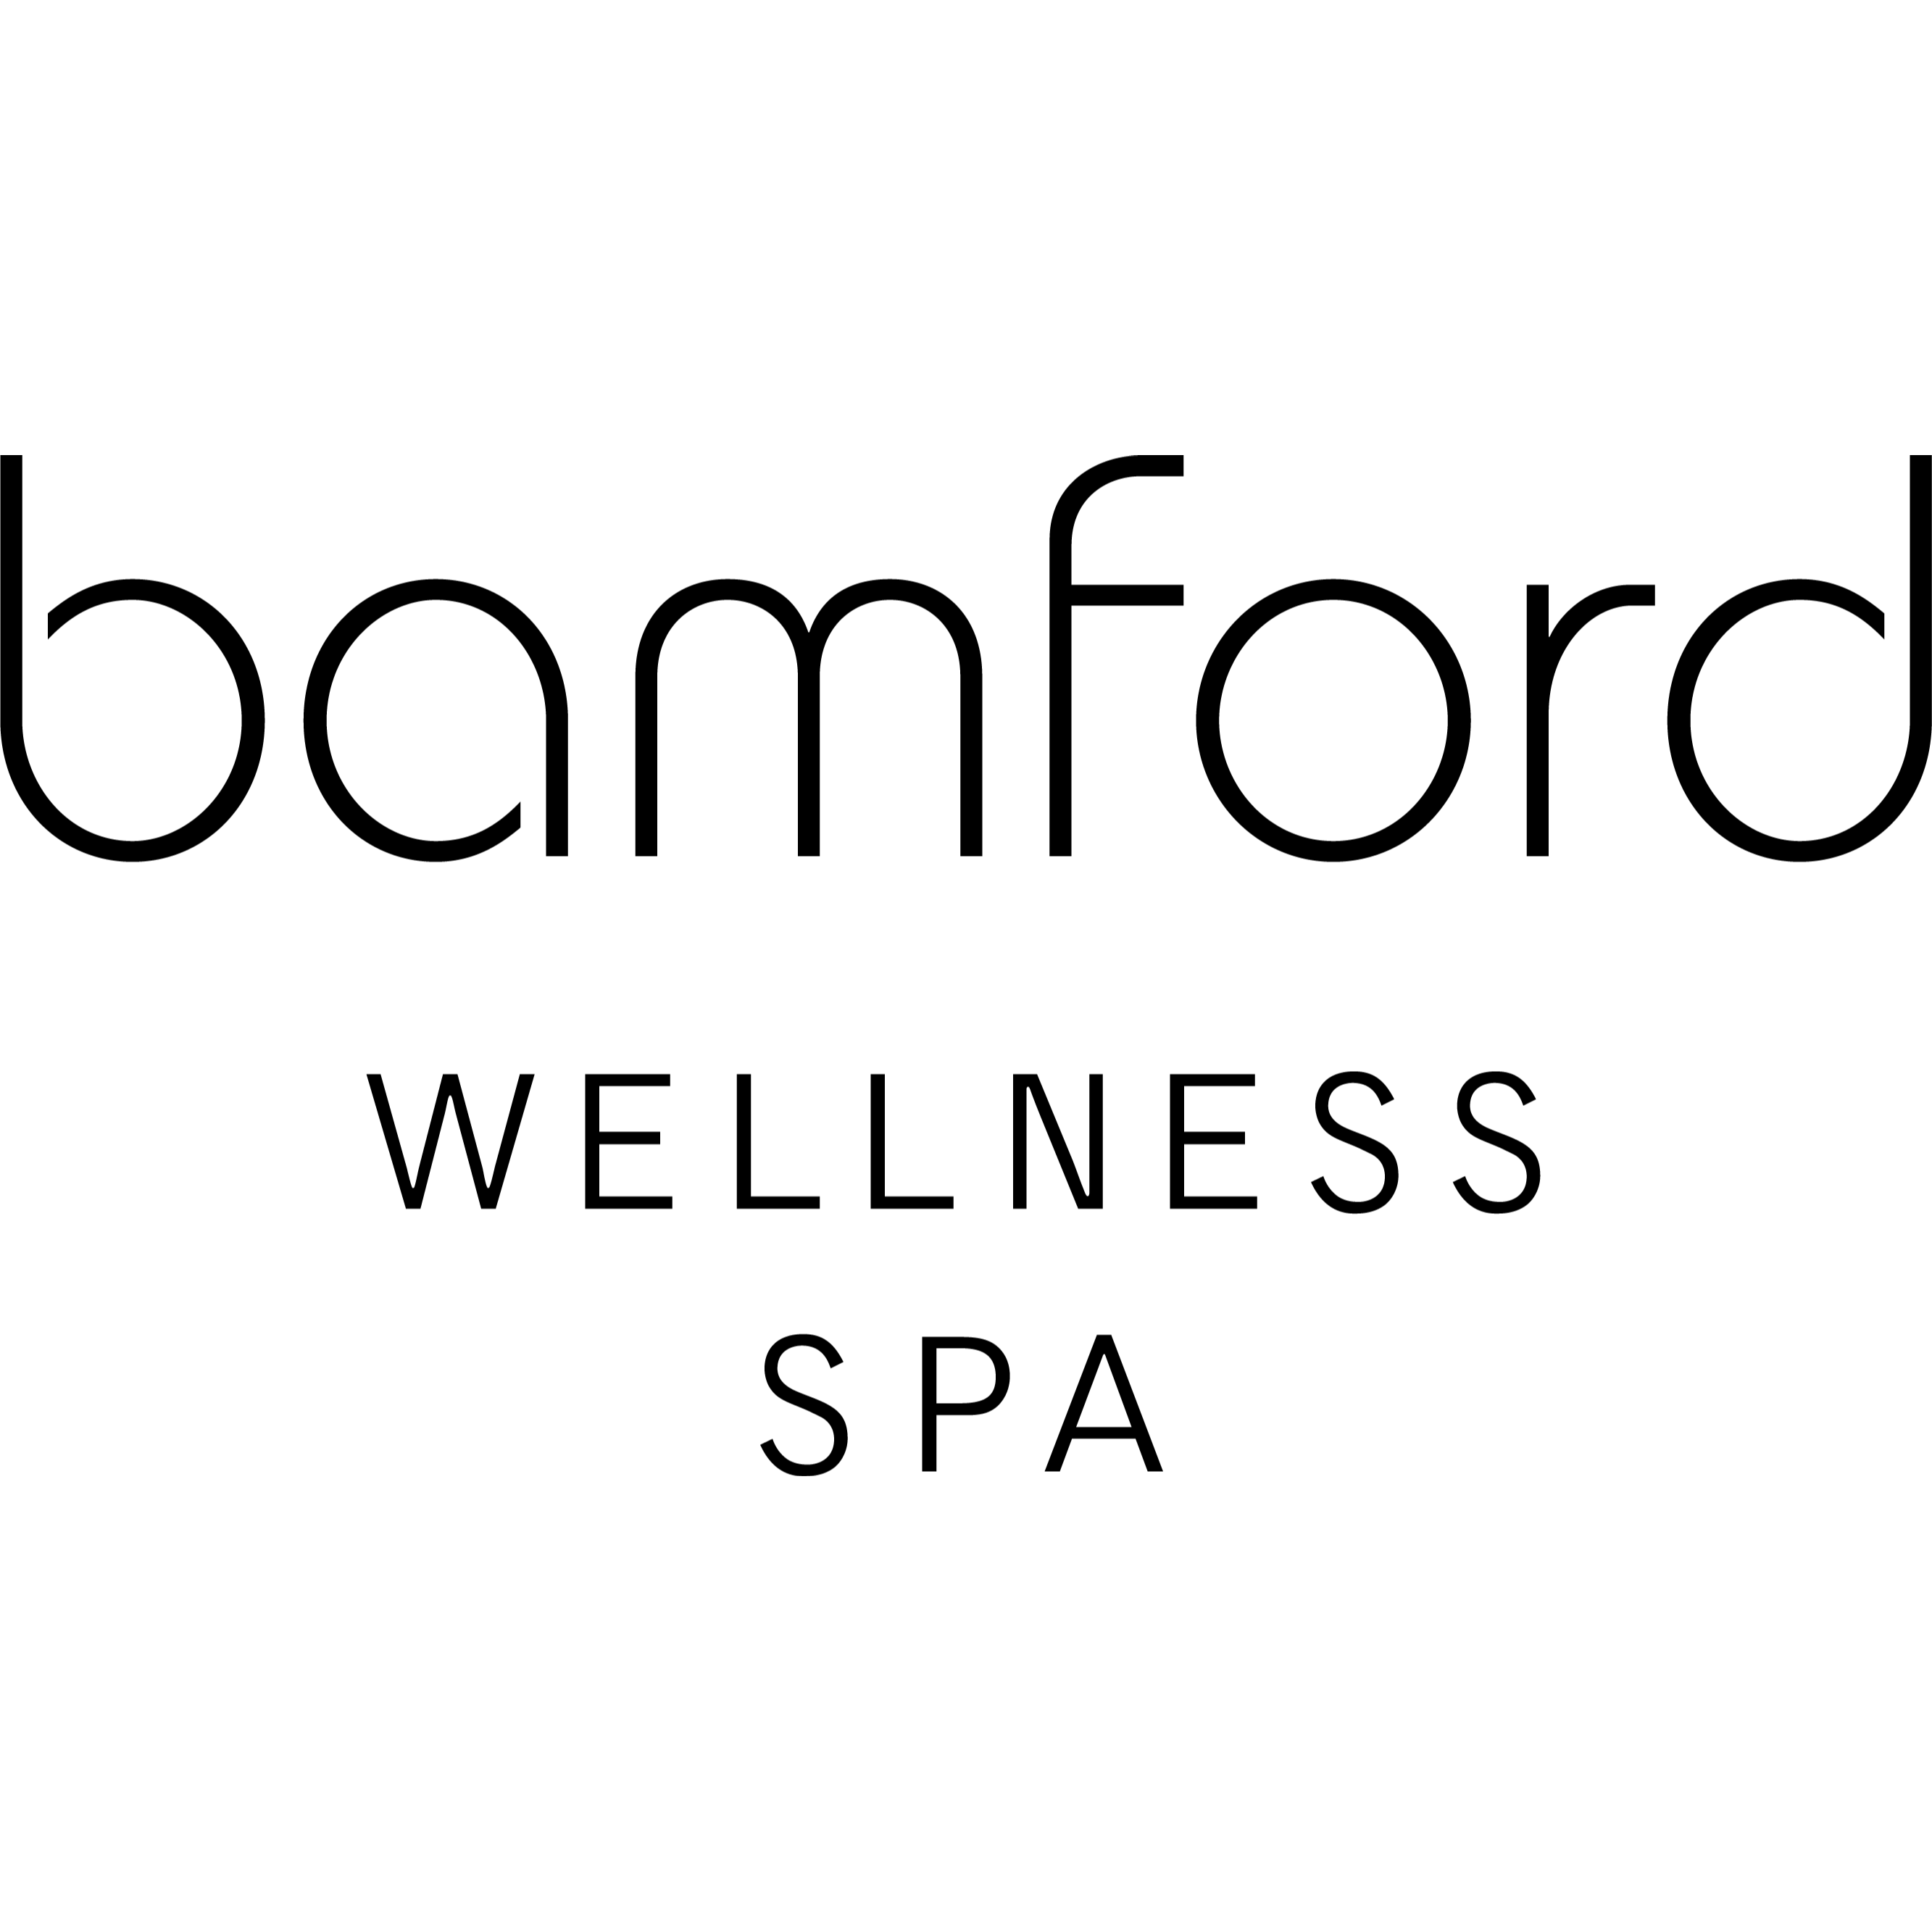 Bamford Wellness Spa Princeville (808)977-1230